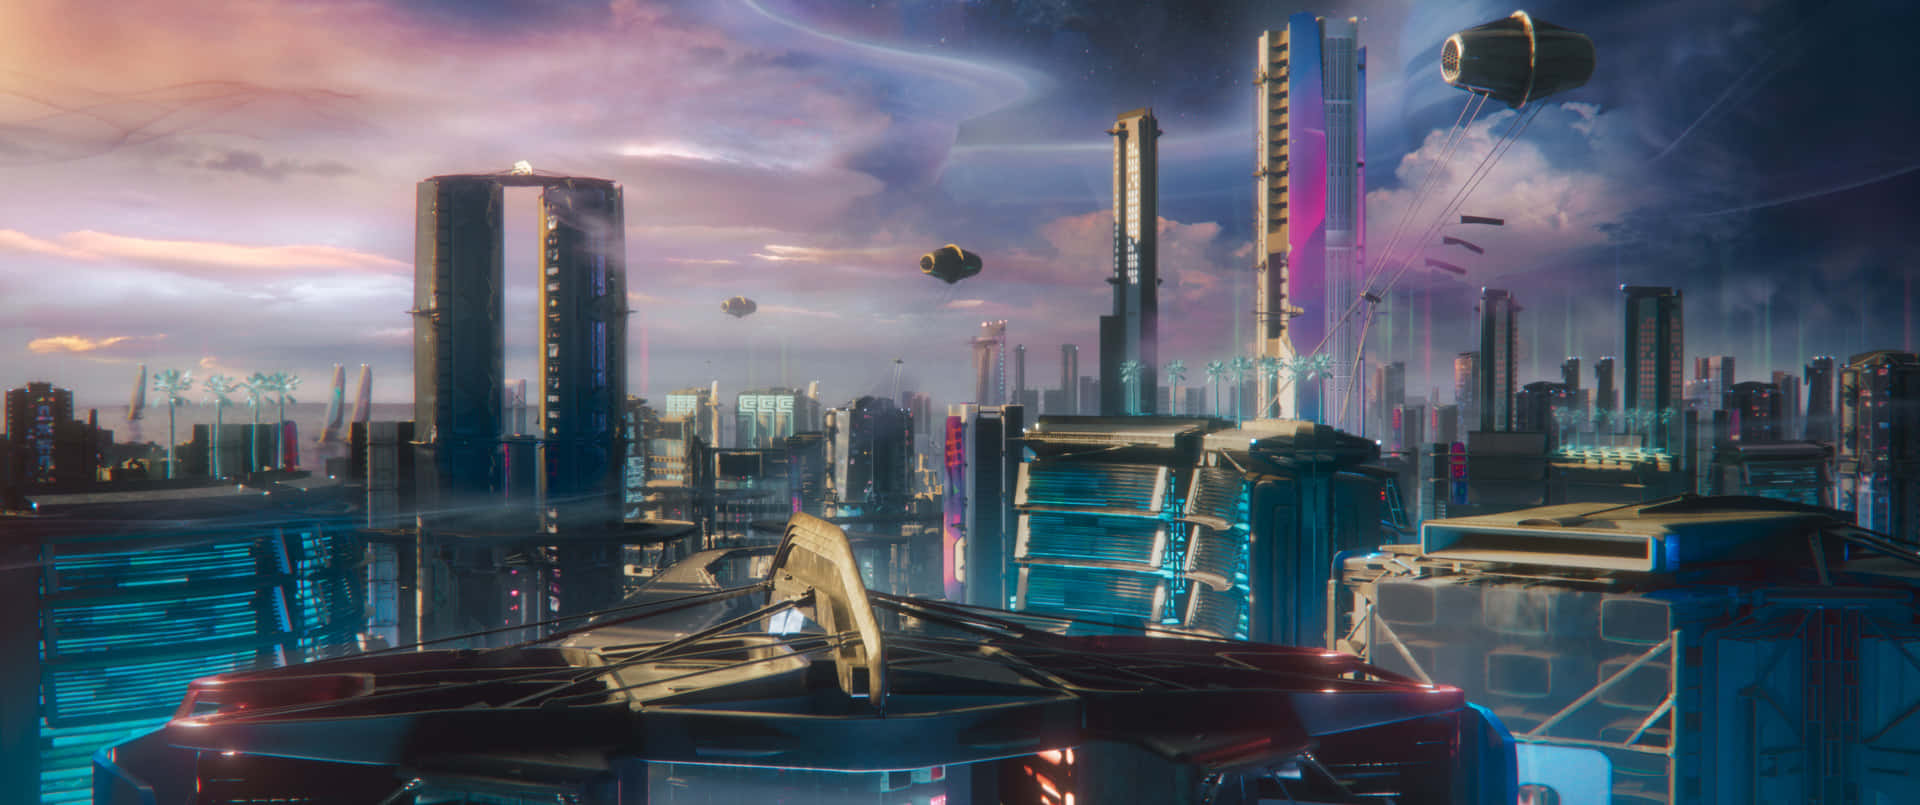 Destiny2 Lightfall Cityscape Wallpaper